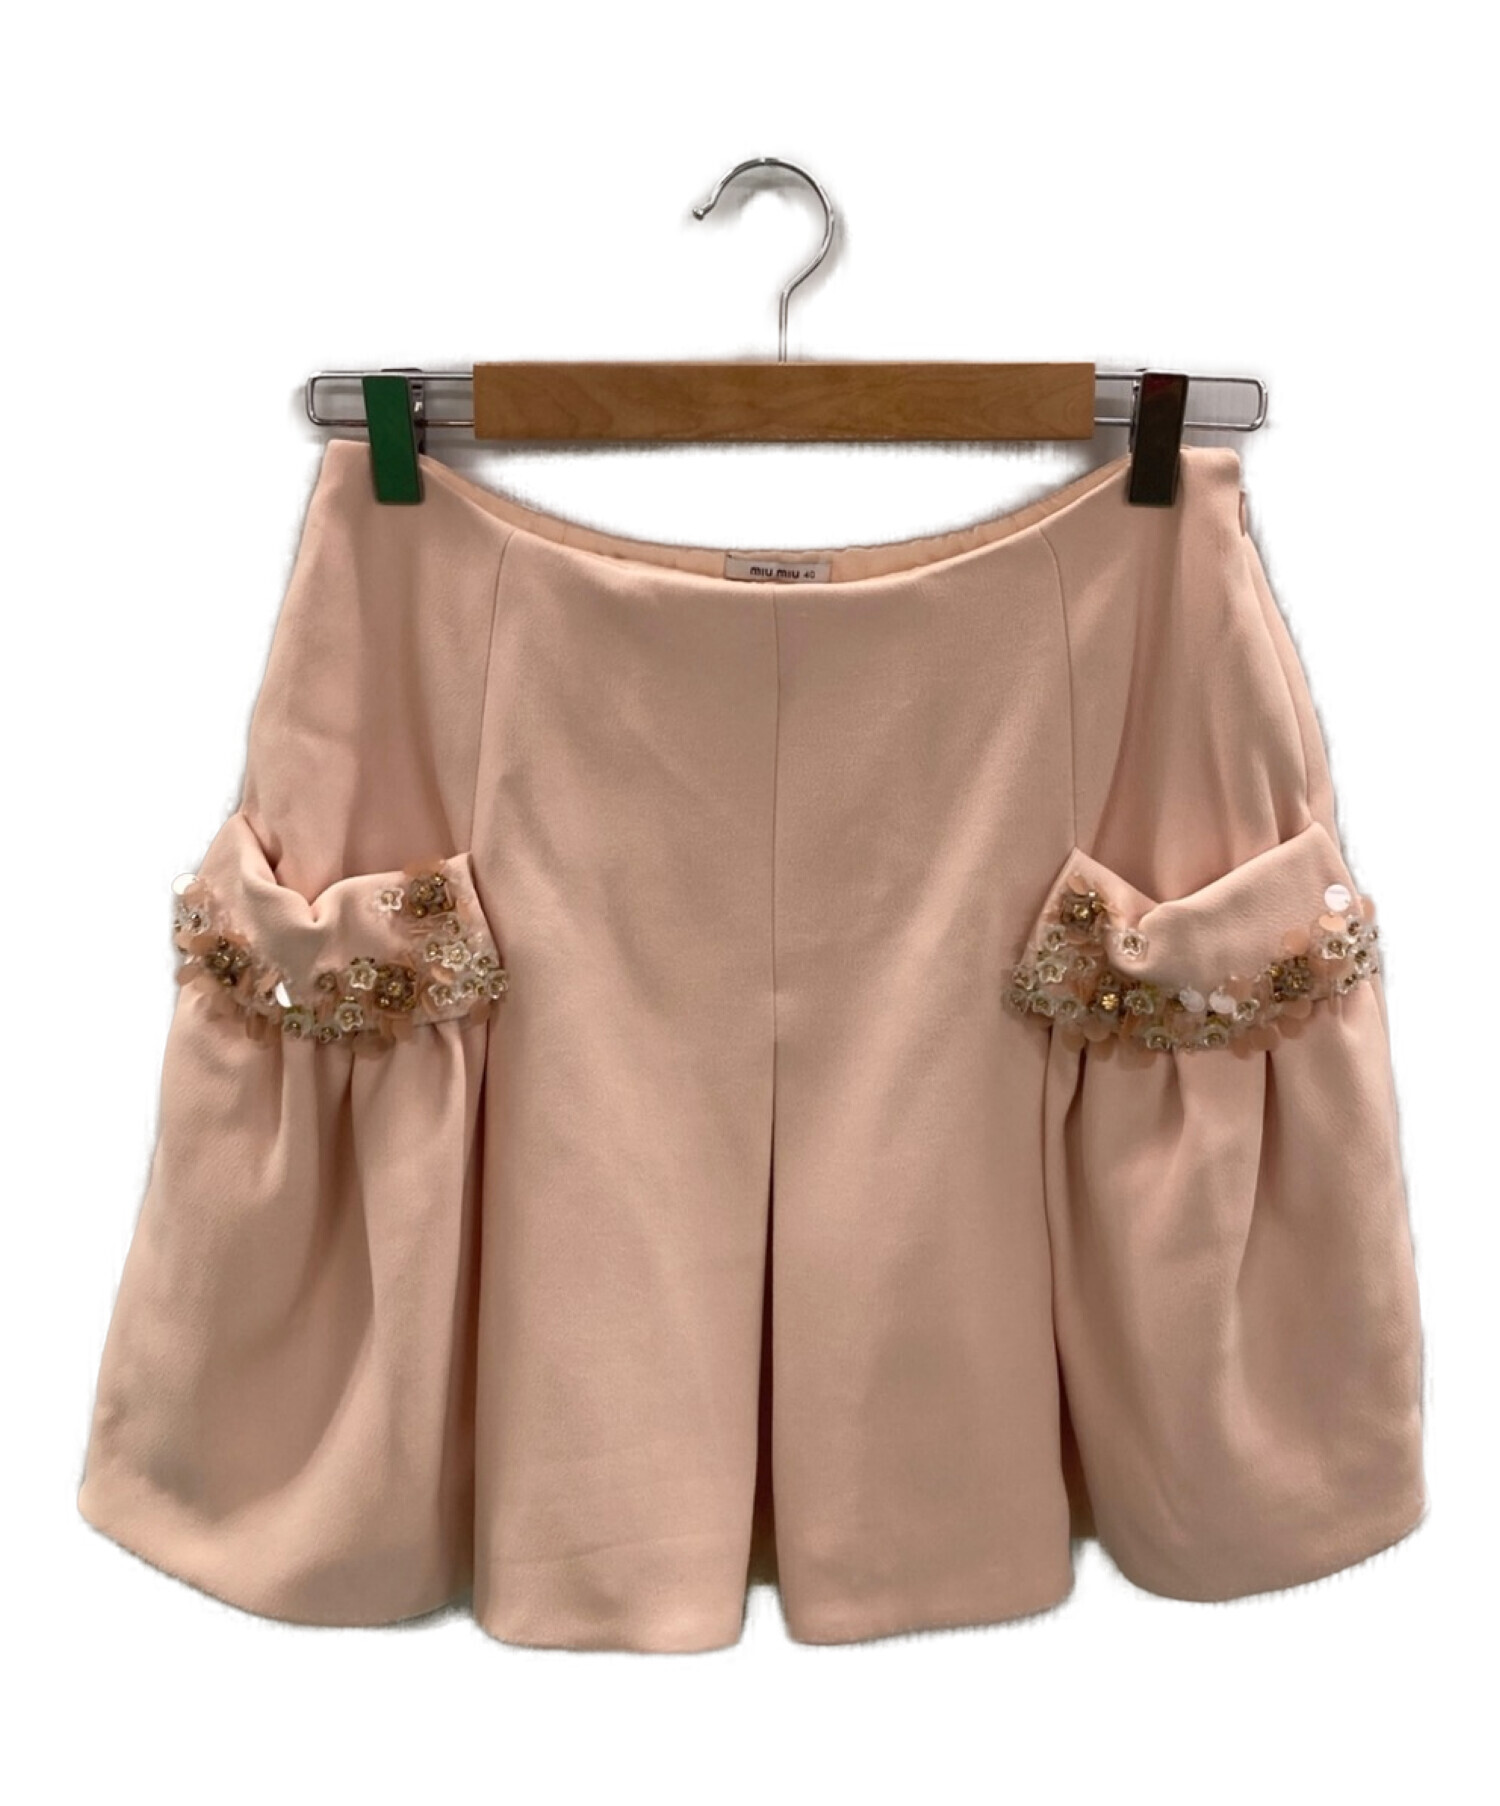 miumiu フレアスカート ピンク ミュウミュウ - ひざ丈スカート